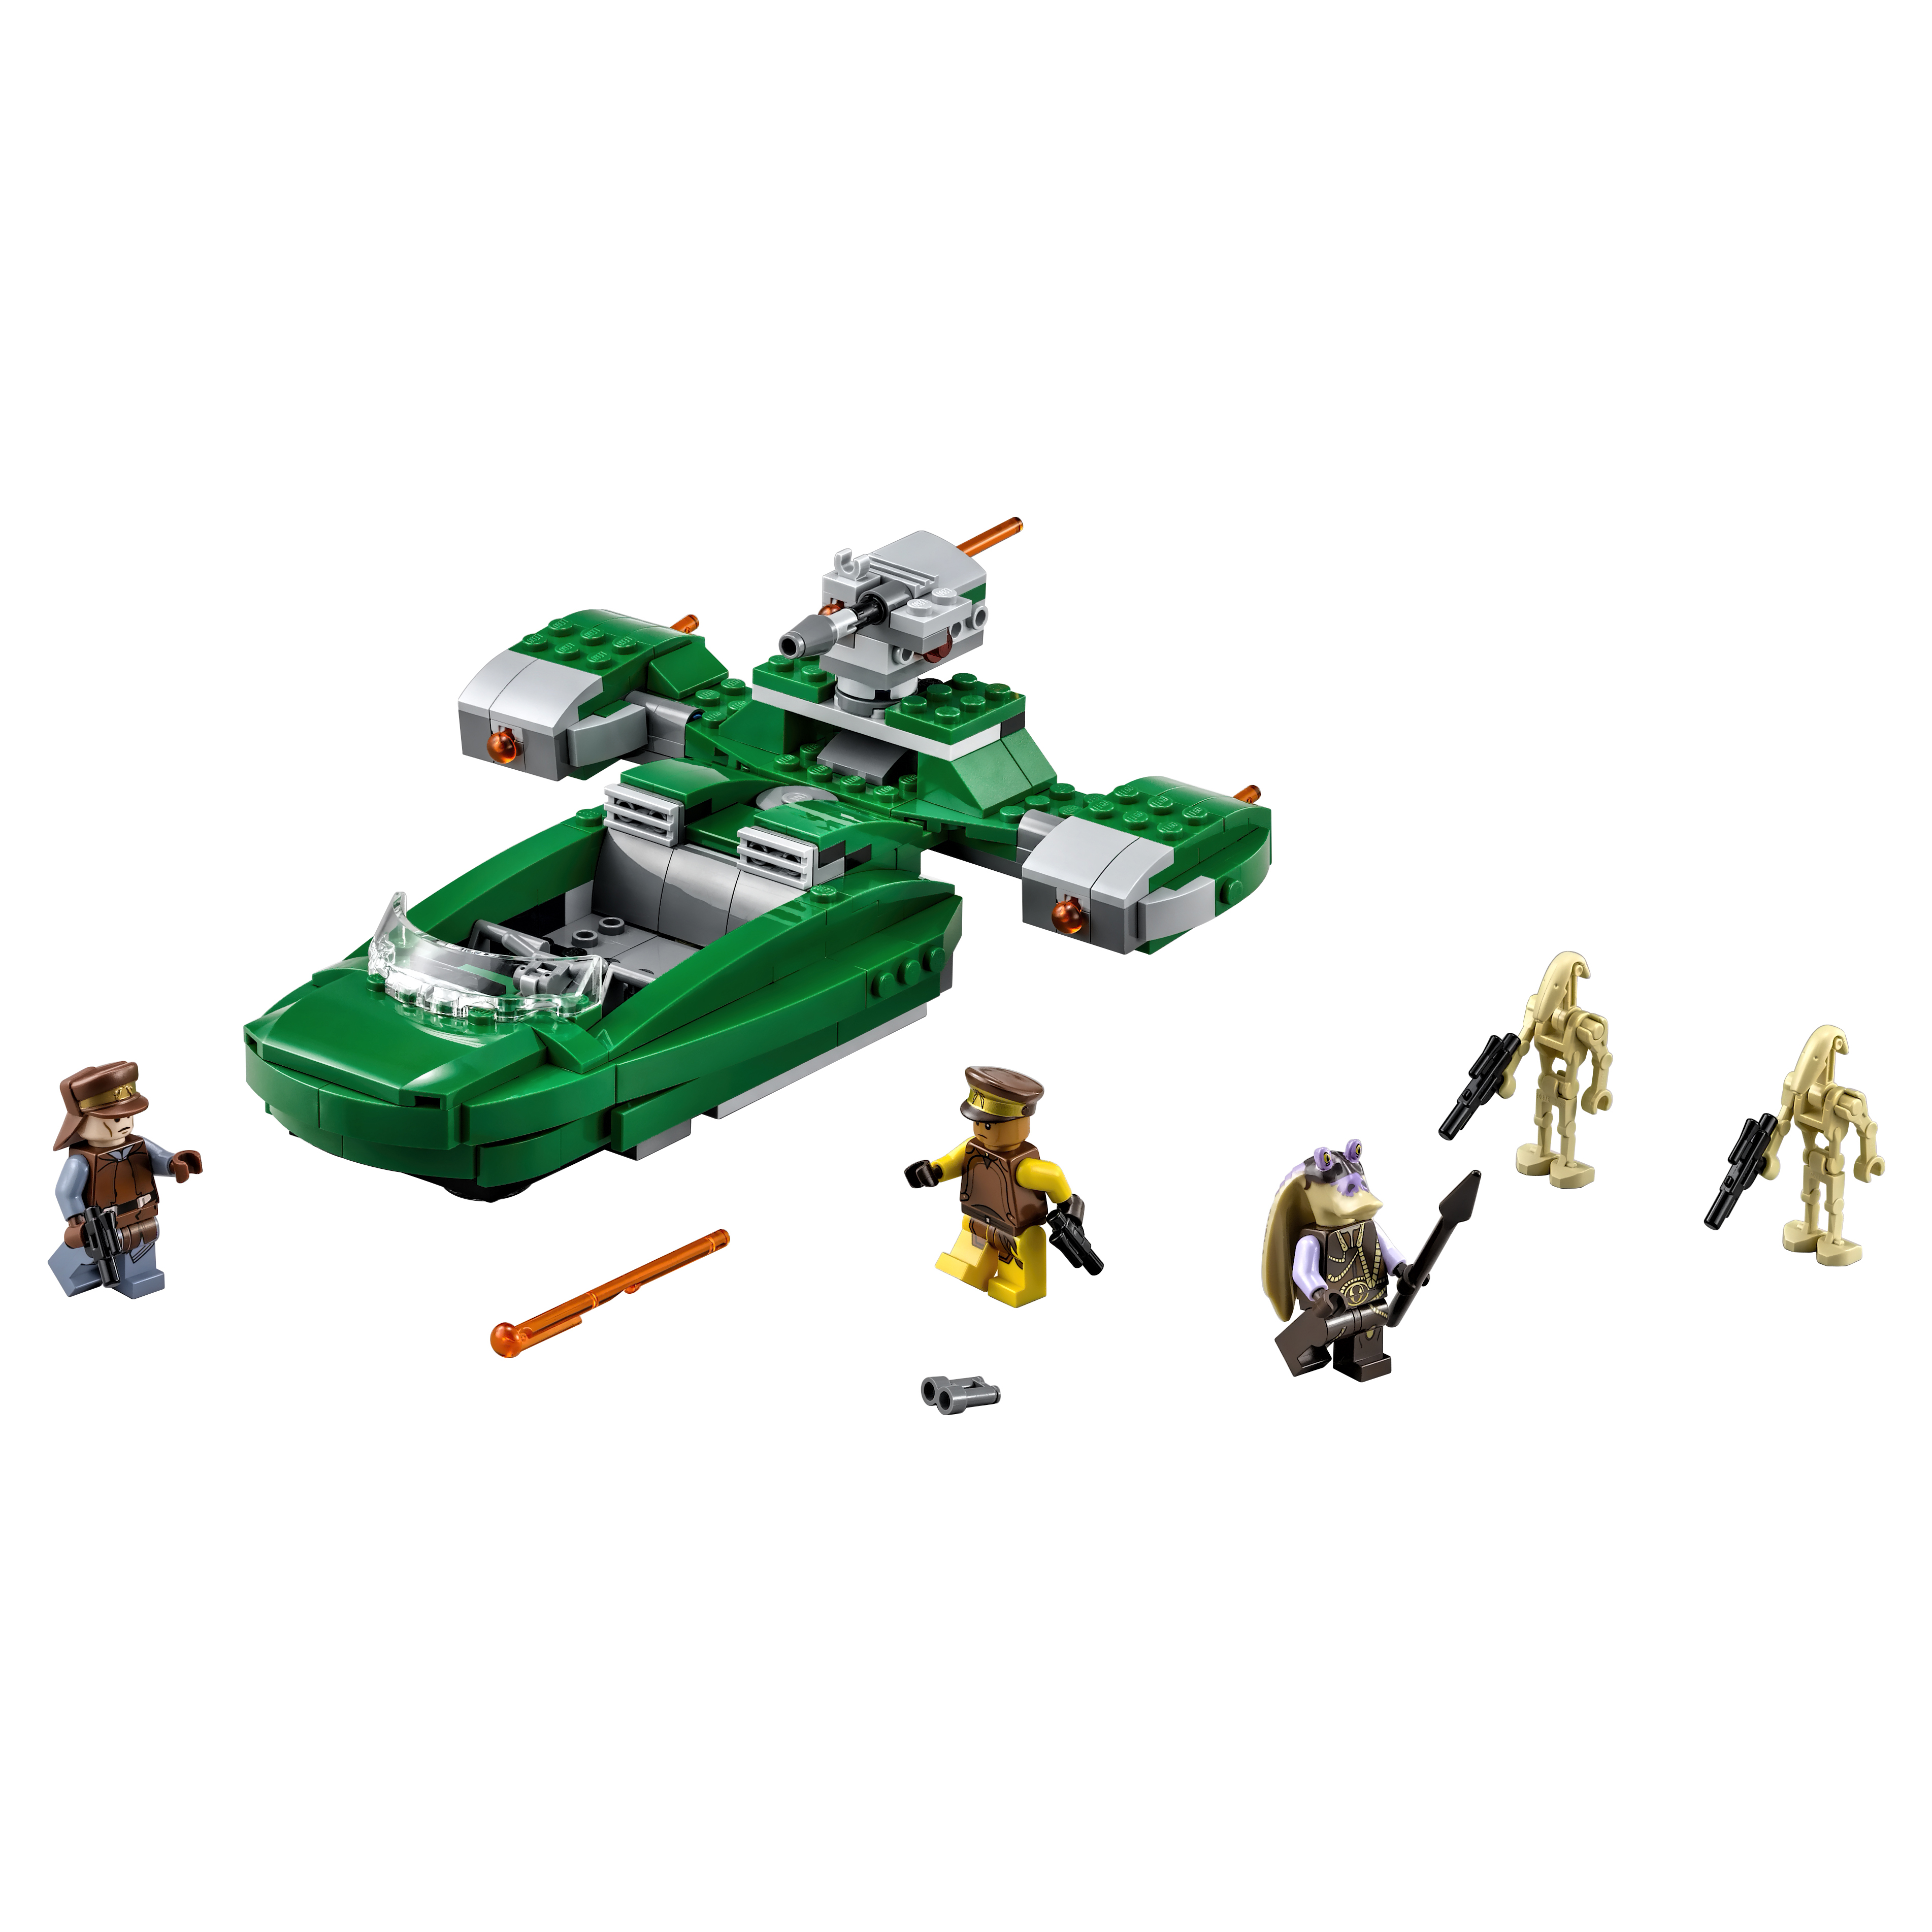 Конструктор LEGO Star Wars Флэш-спидер (Flash Speeder) (75091) конструктор lego star wars спидер молоха 75210